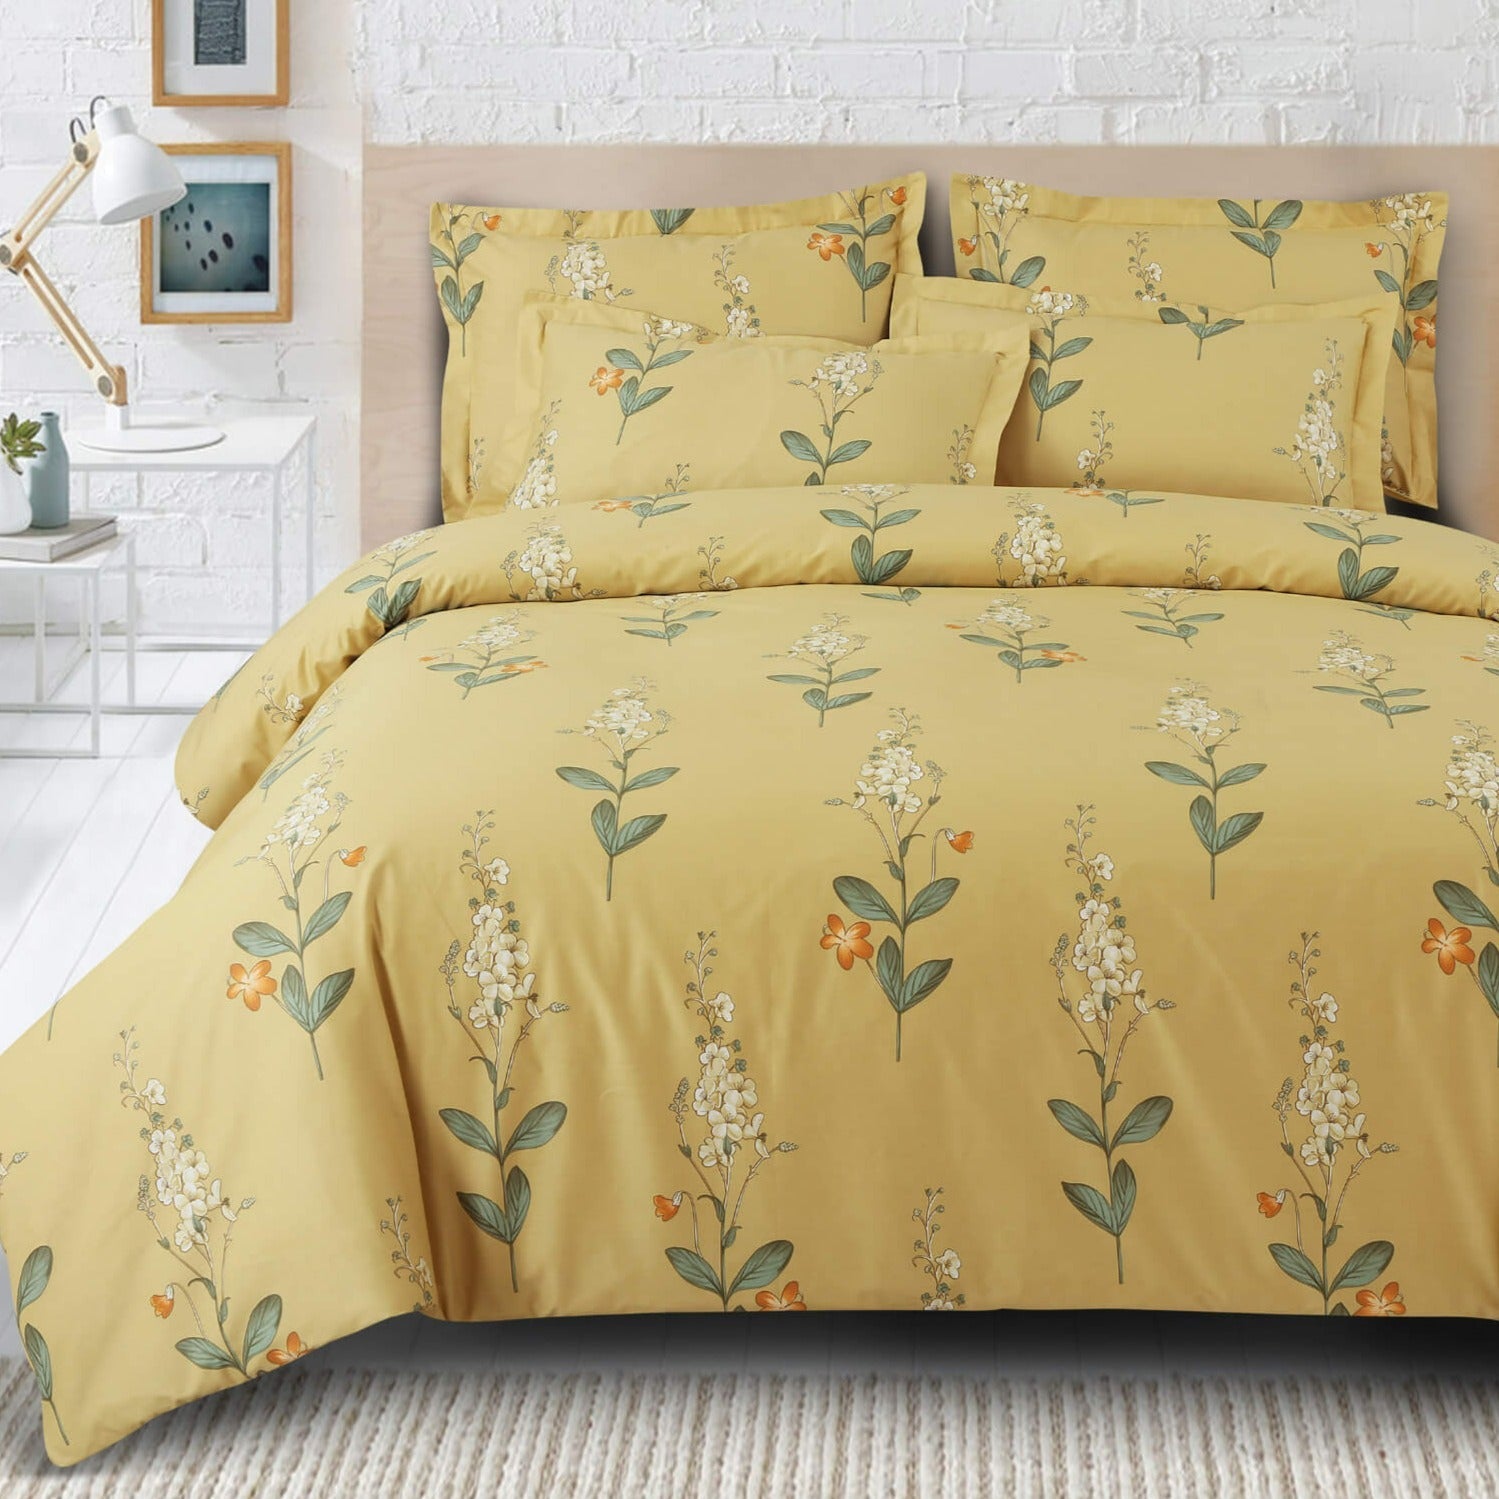 Malako Royale XL Yellow Botanic 100% Cotton King Size Bed Sheet/Bedding Set - MALAKO